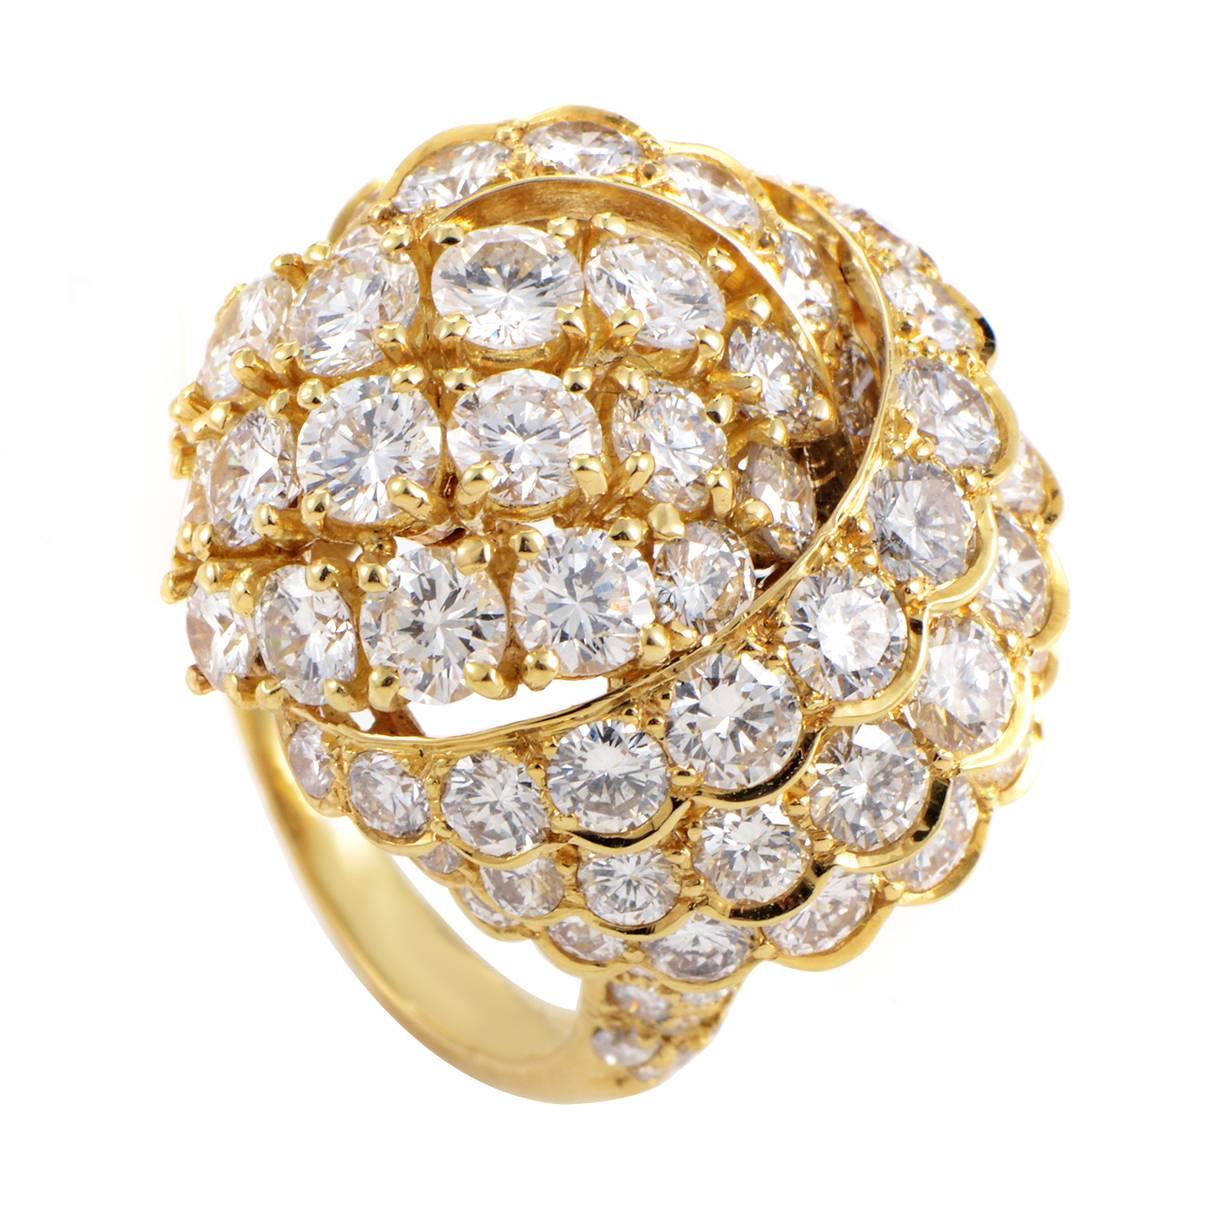 Van Cleef & Arpels Yellow Gold Diamond Ring